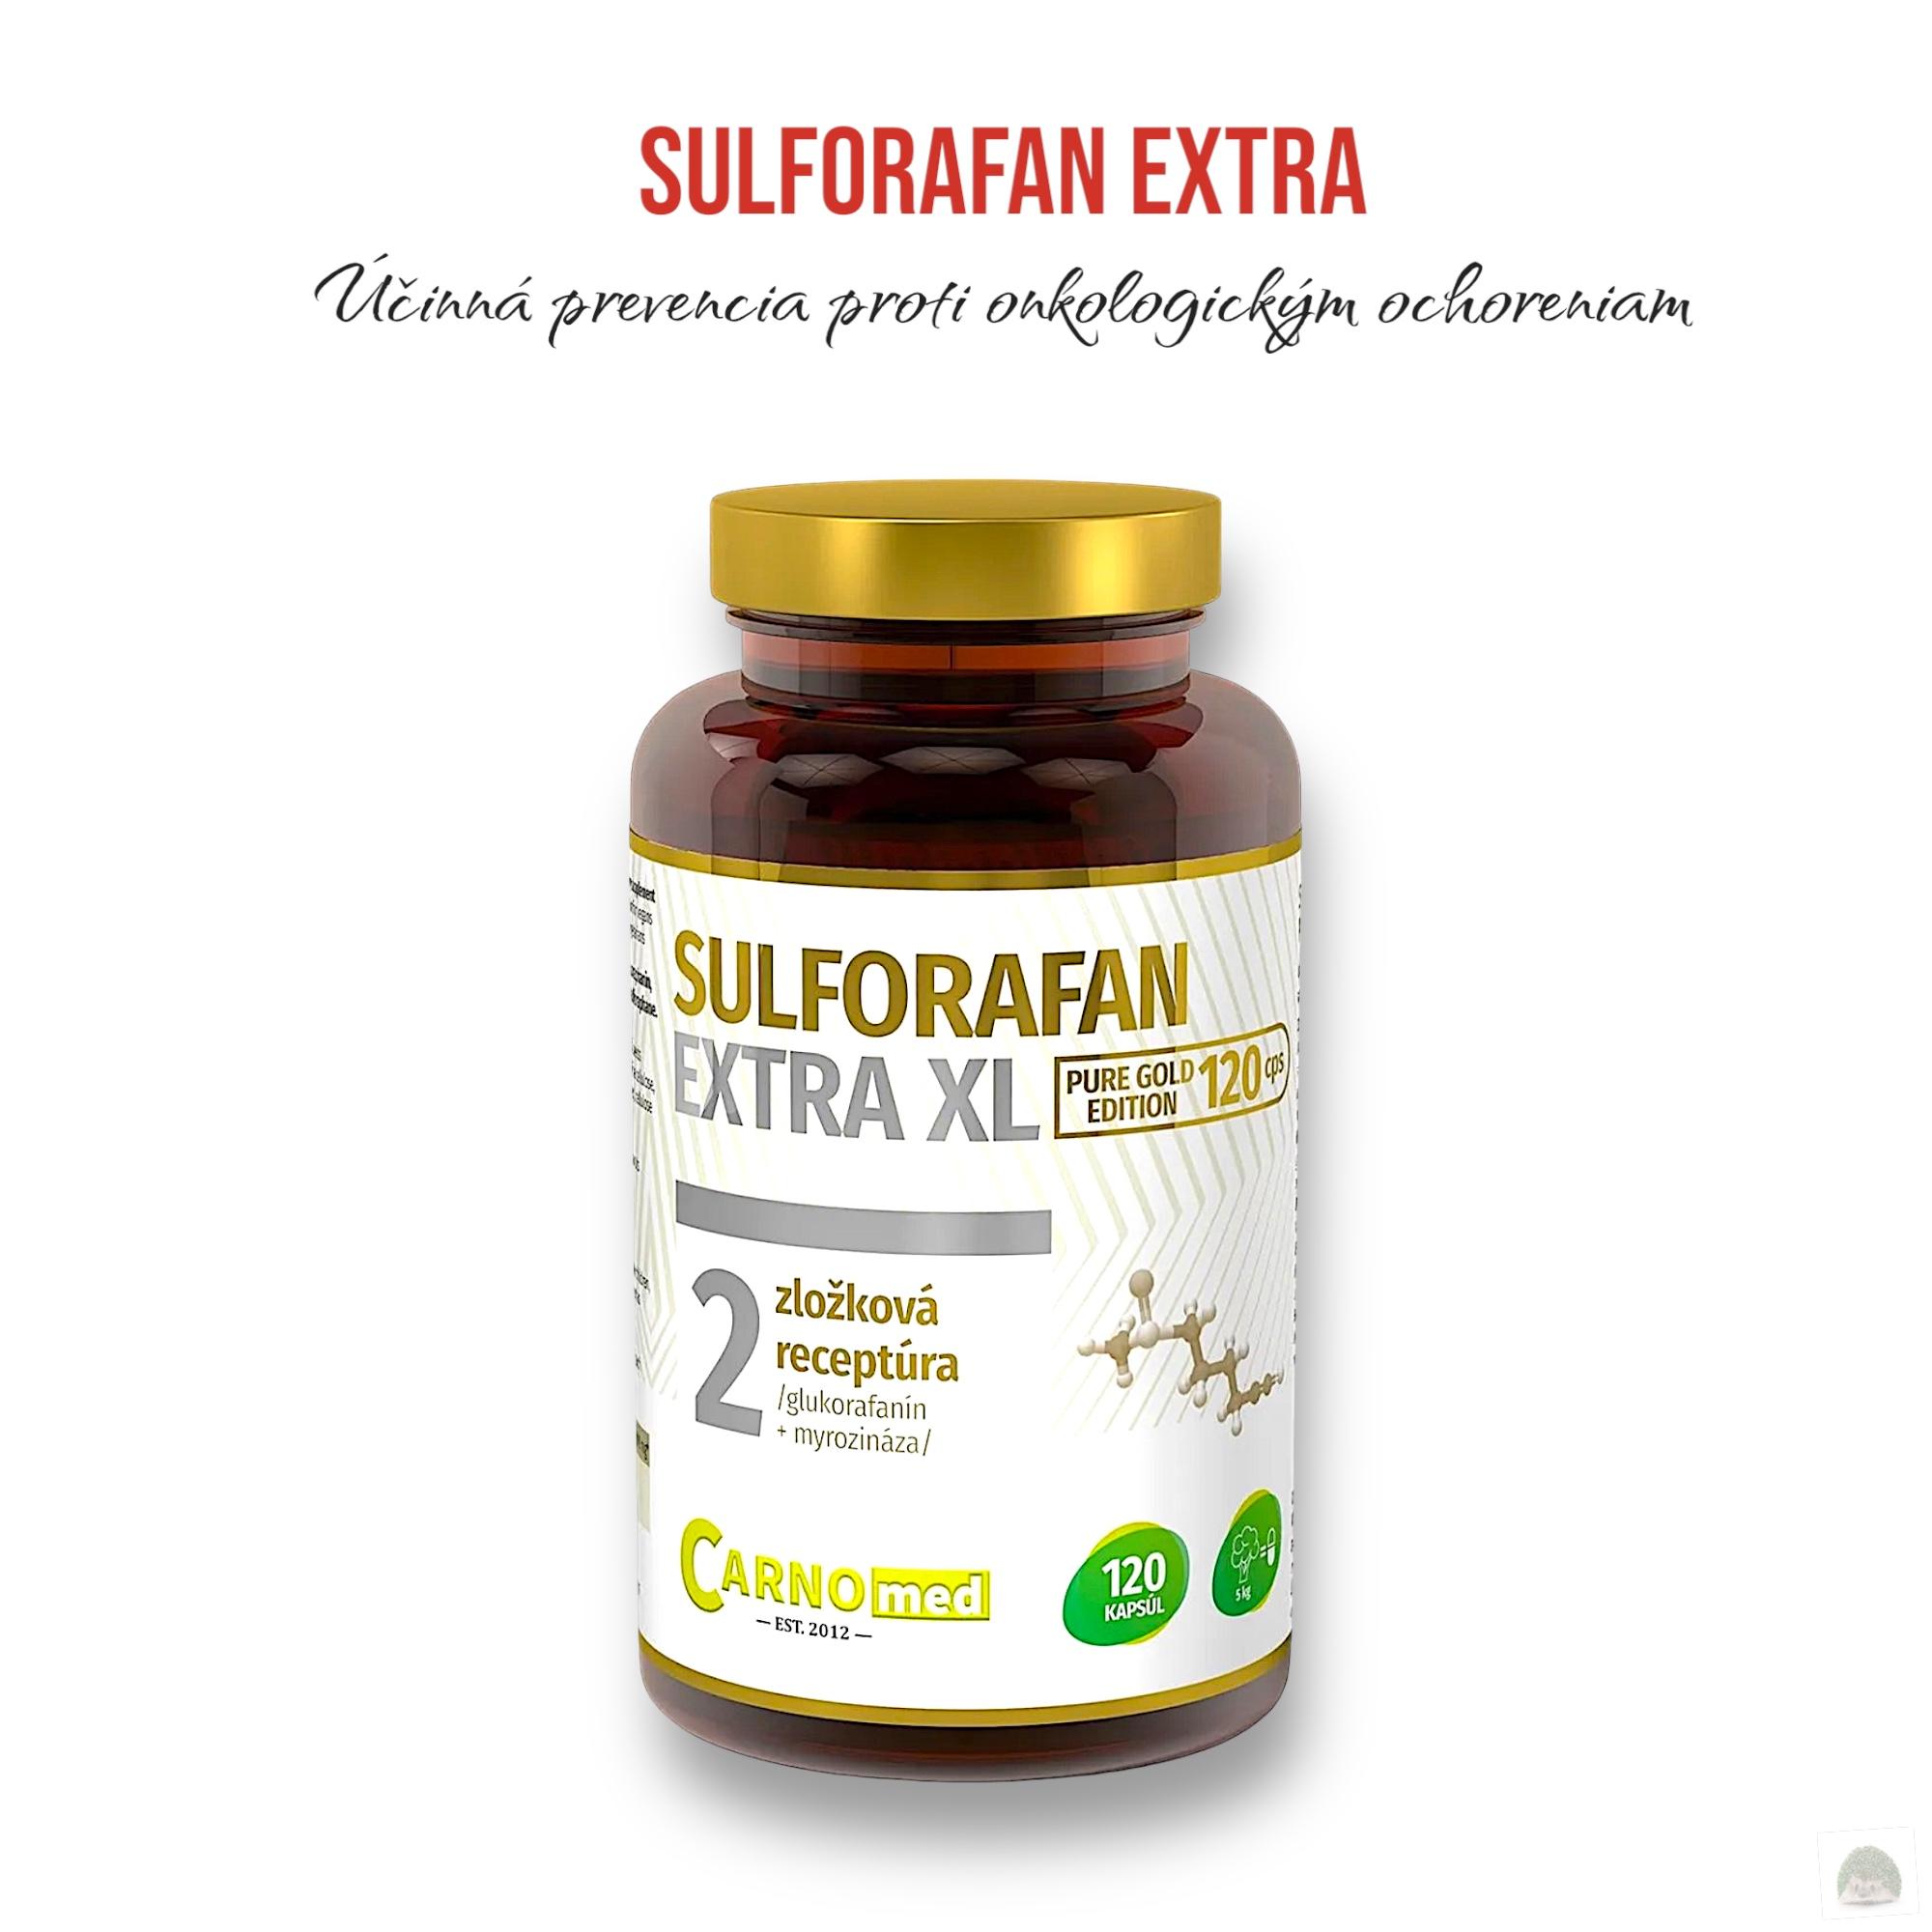 Sulforafan EXTRA XL Pure Gold Edition 120